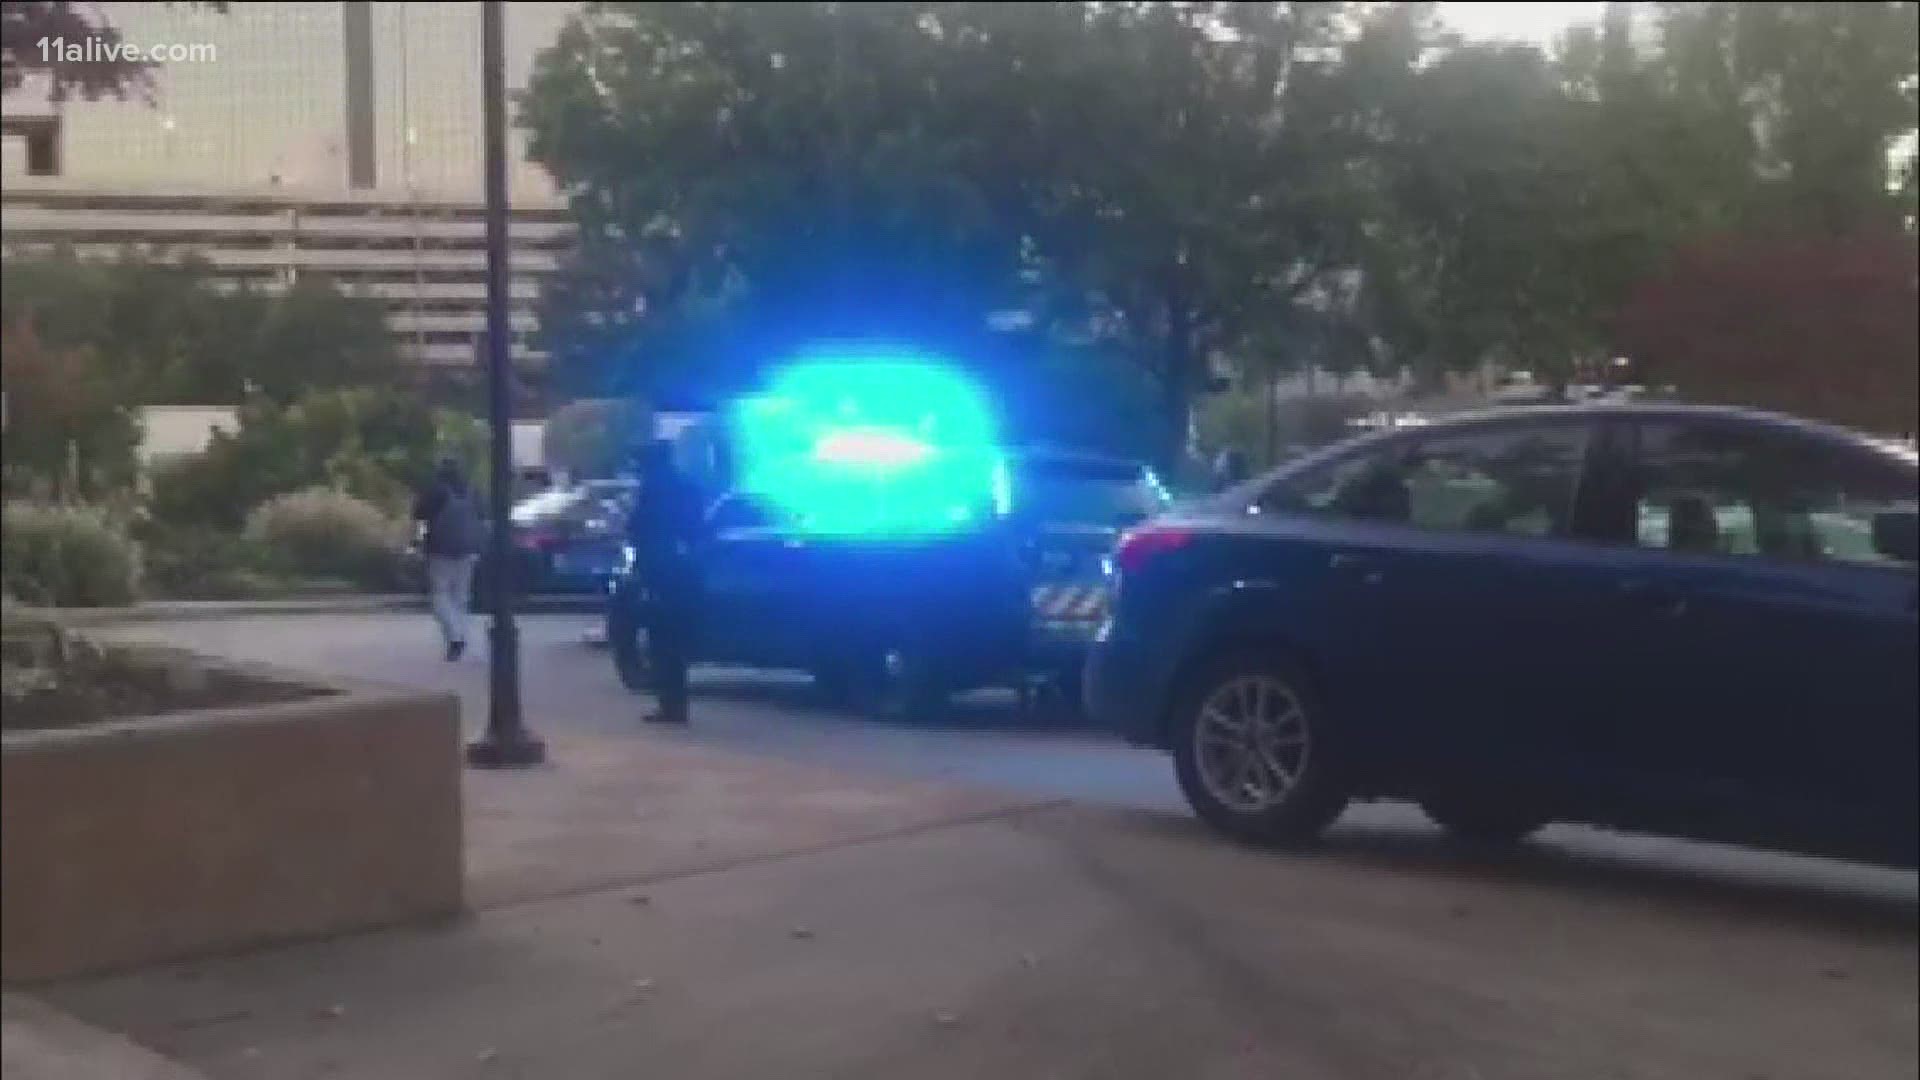 Lenox shooting over parking space leaves one dead in Atlanta